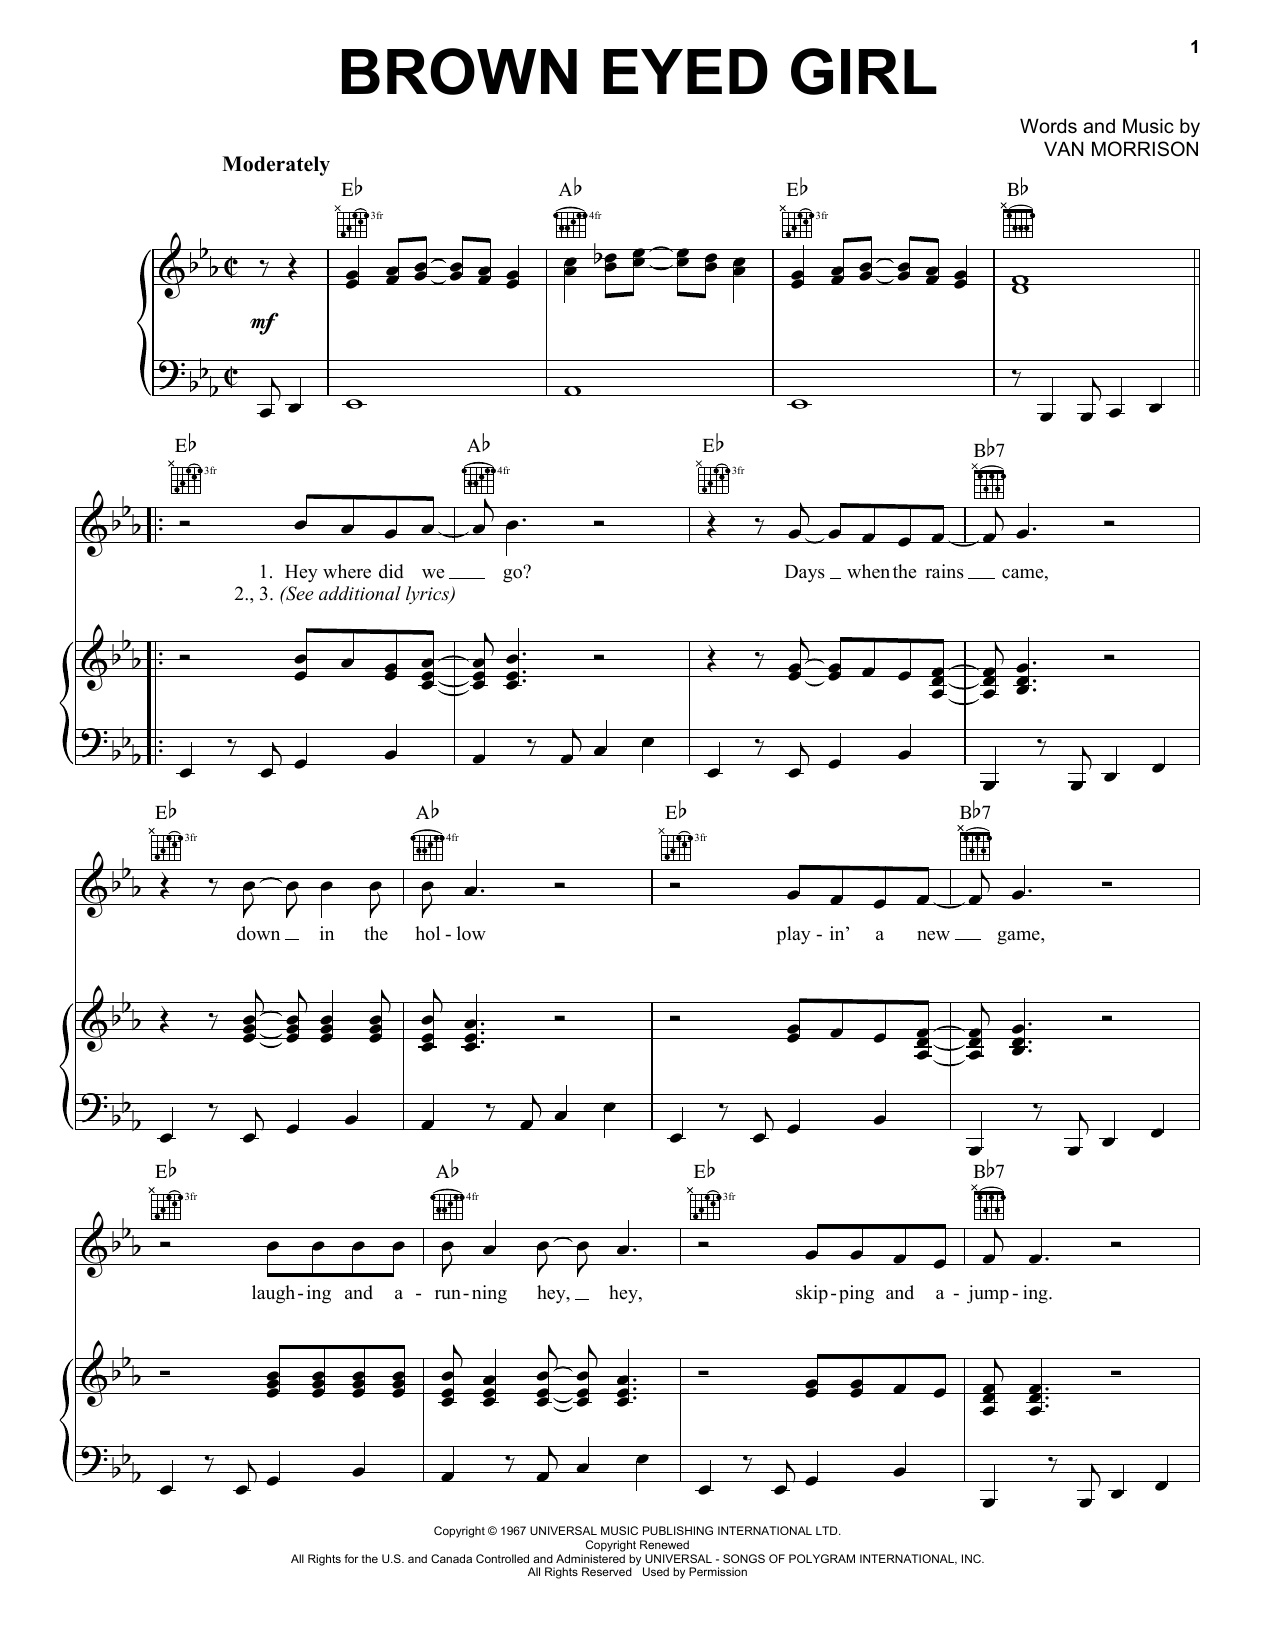 Van Morrison Brown Eyed Girl Sheet Music Notes & Chords for Melody Line, Lyrics & Chords - Download or Print PDF